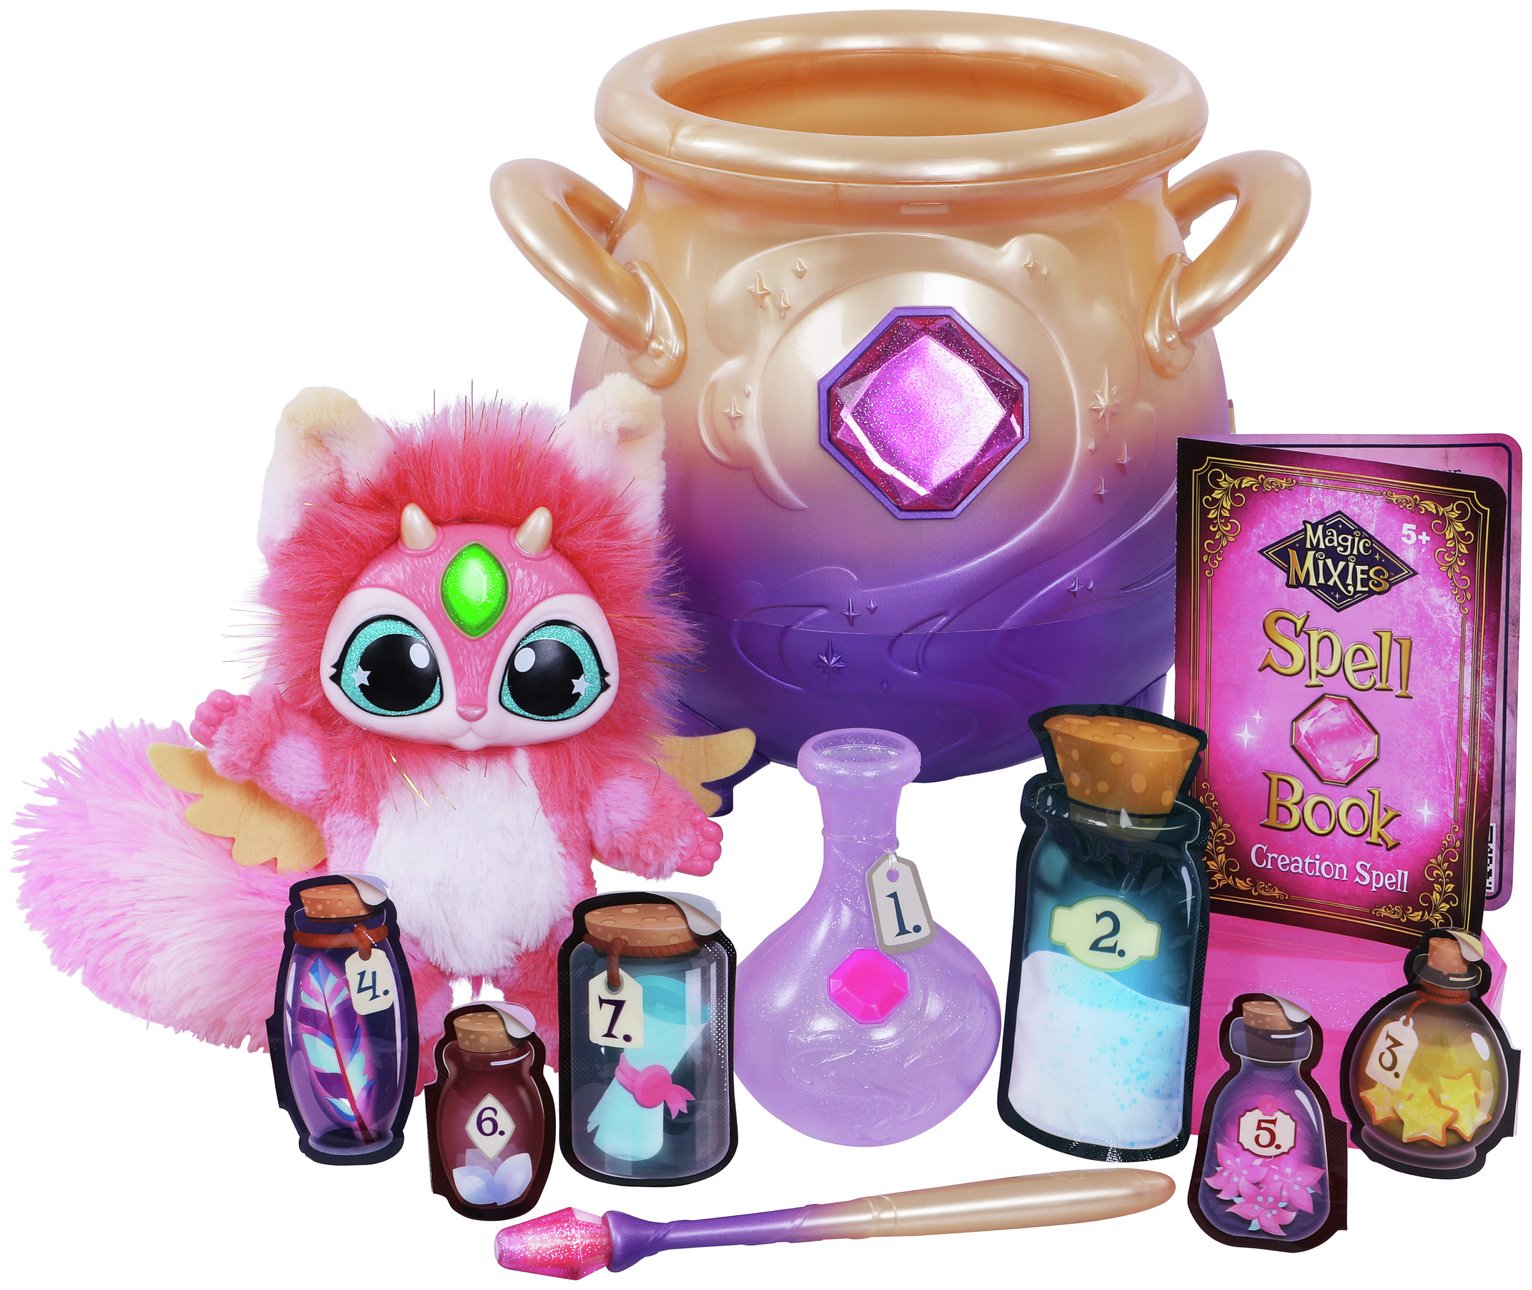 Magic Mixies Magical Misting Cauldron - Pink